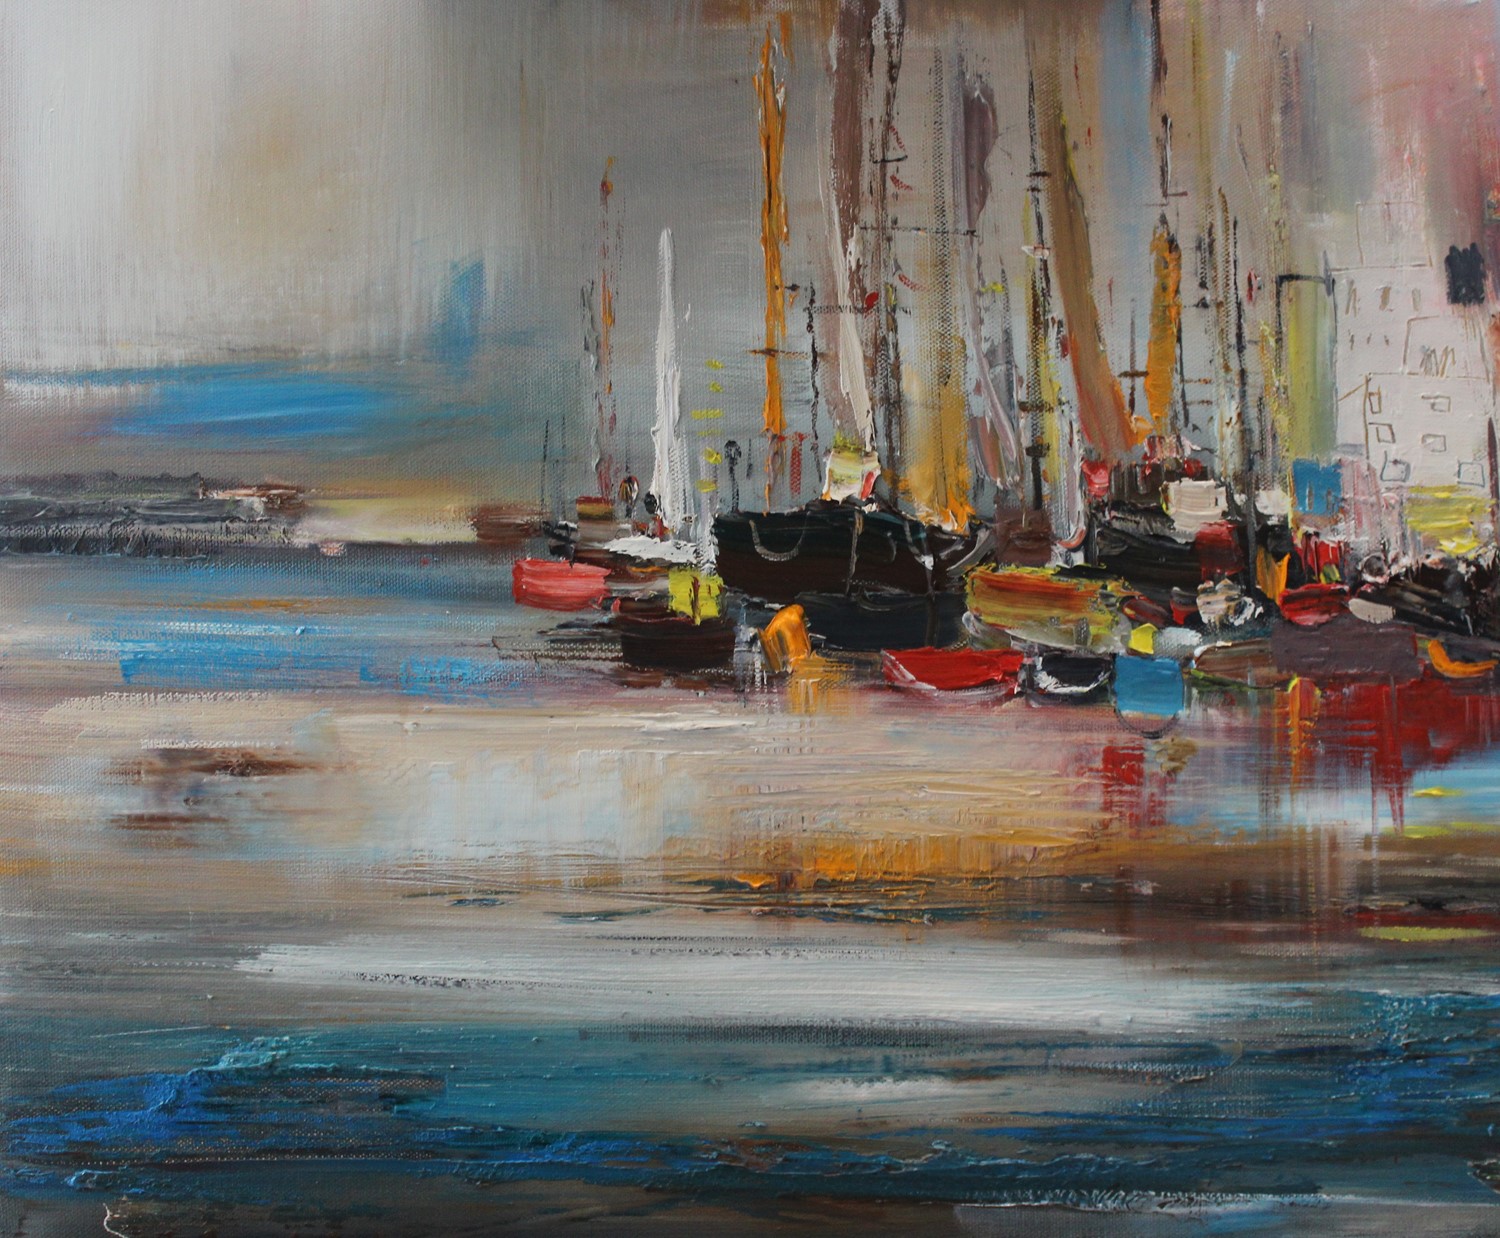 'Boats in Port' by artist Rosanne Barr